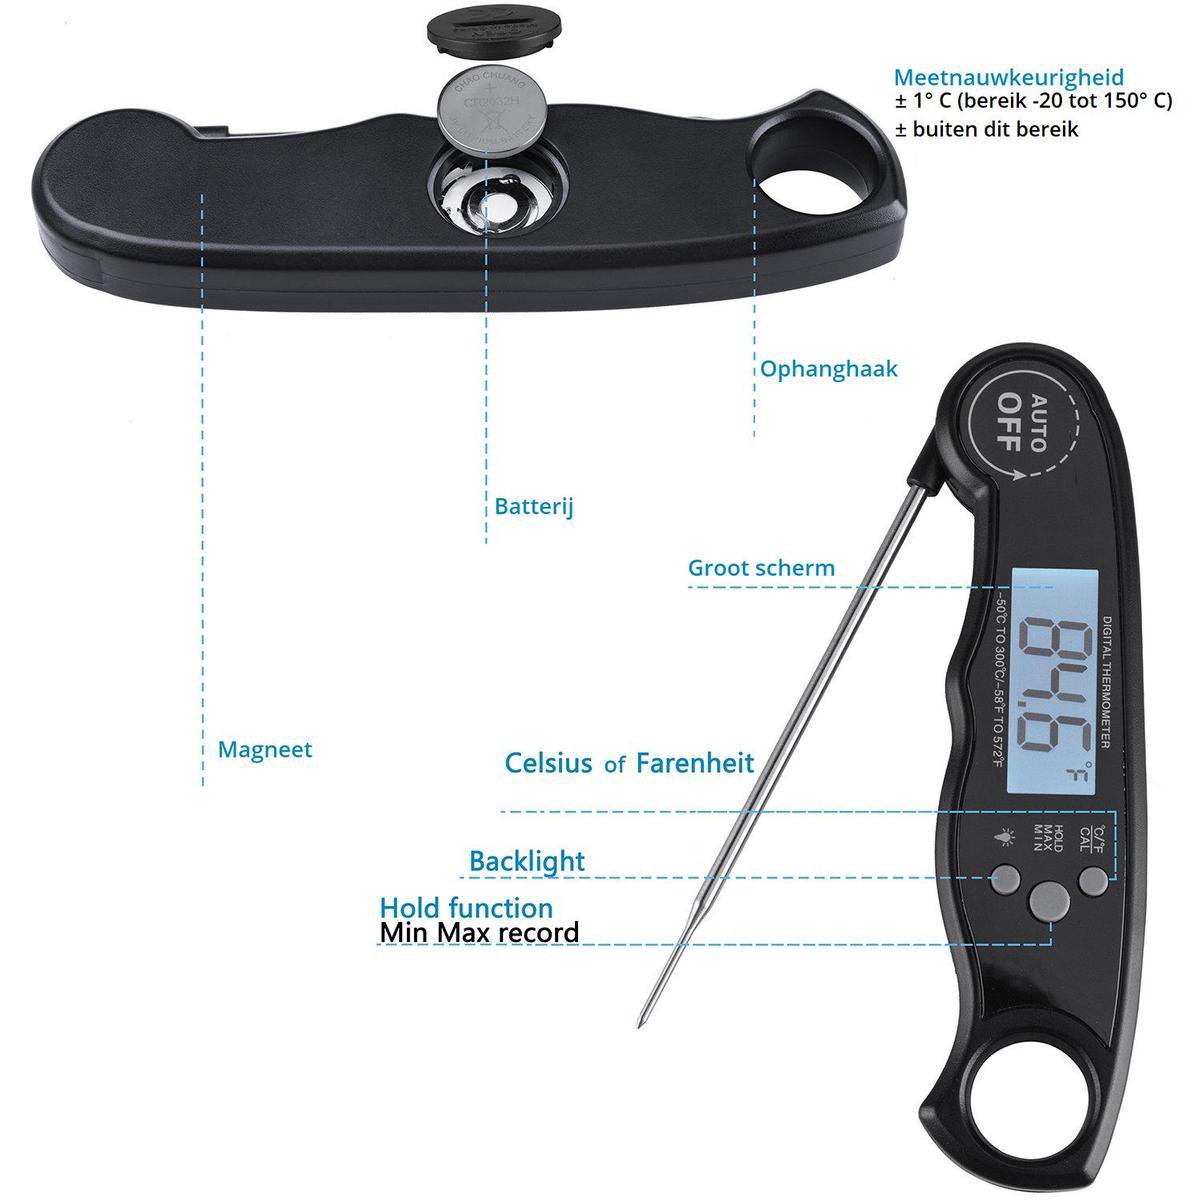 Digitale-thermometer, bak gadgets